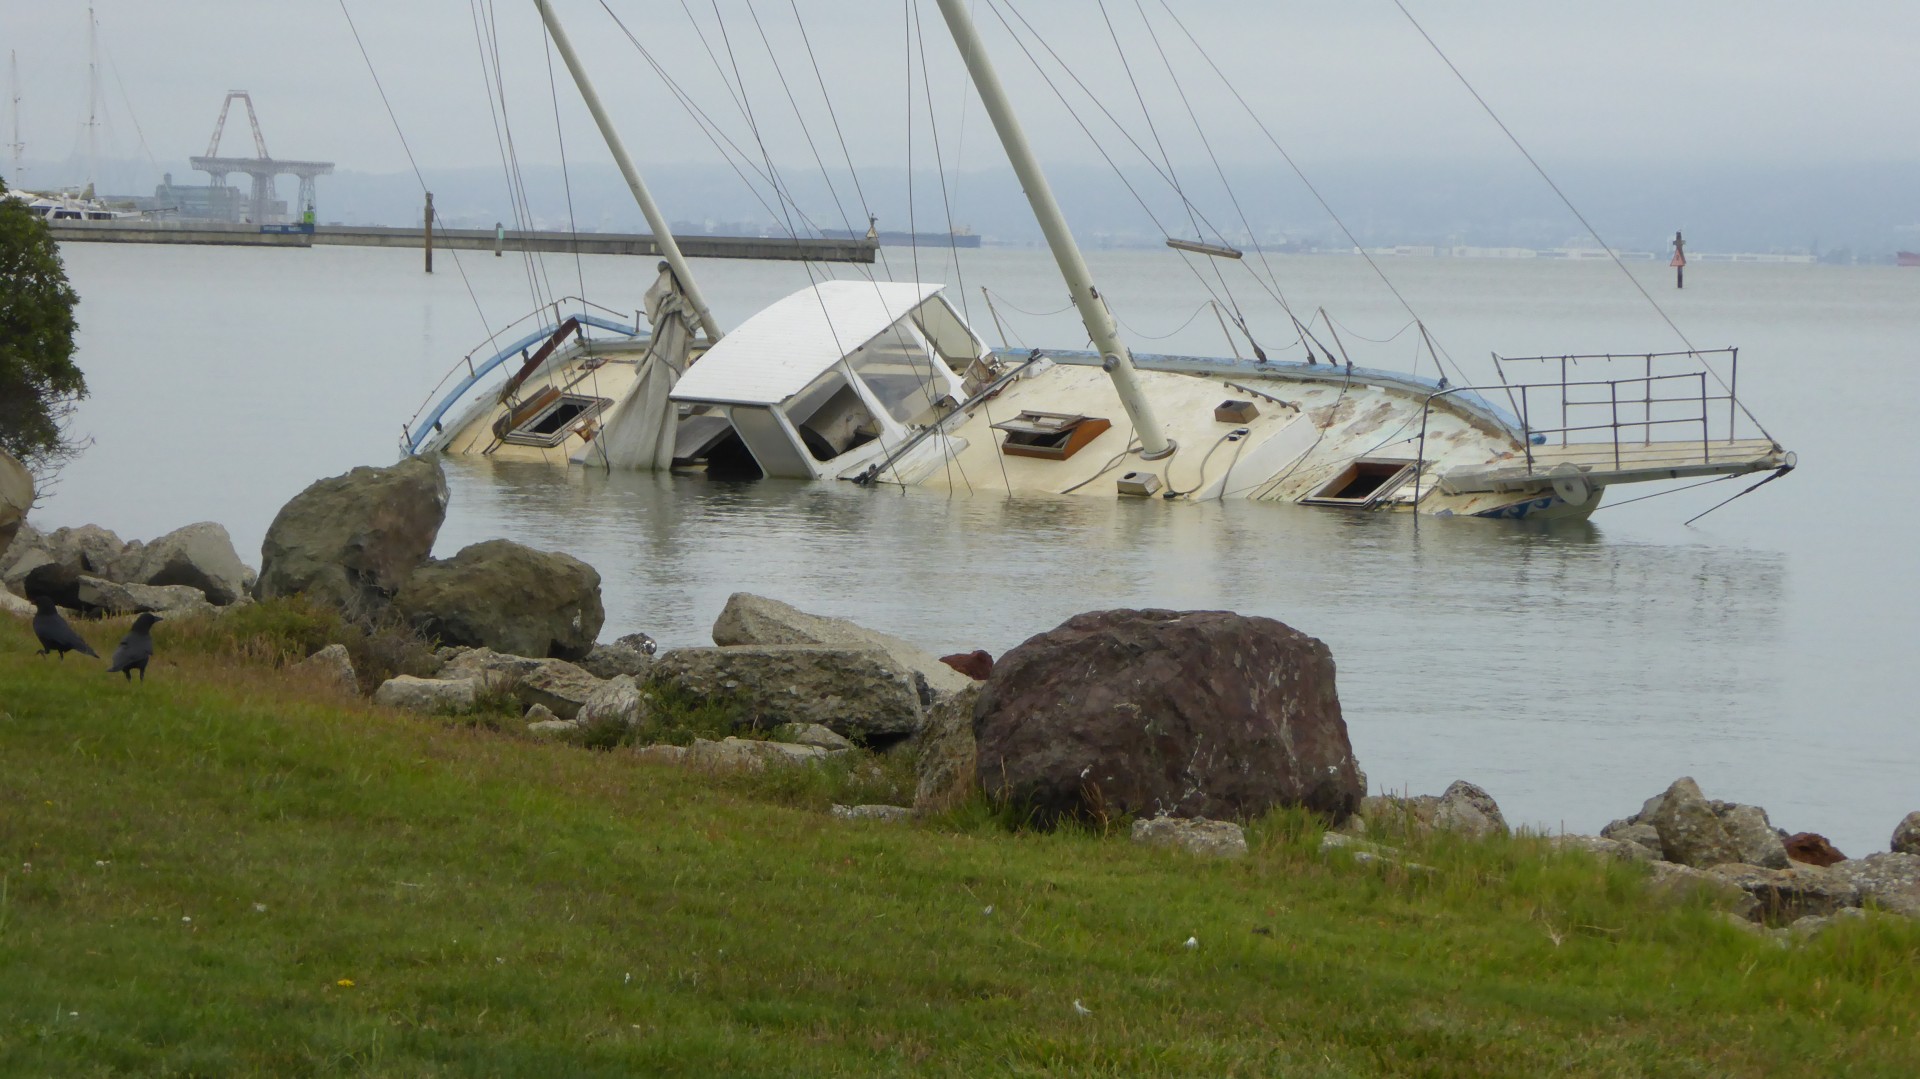 sail boat half sunk rests in the harbor